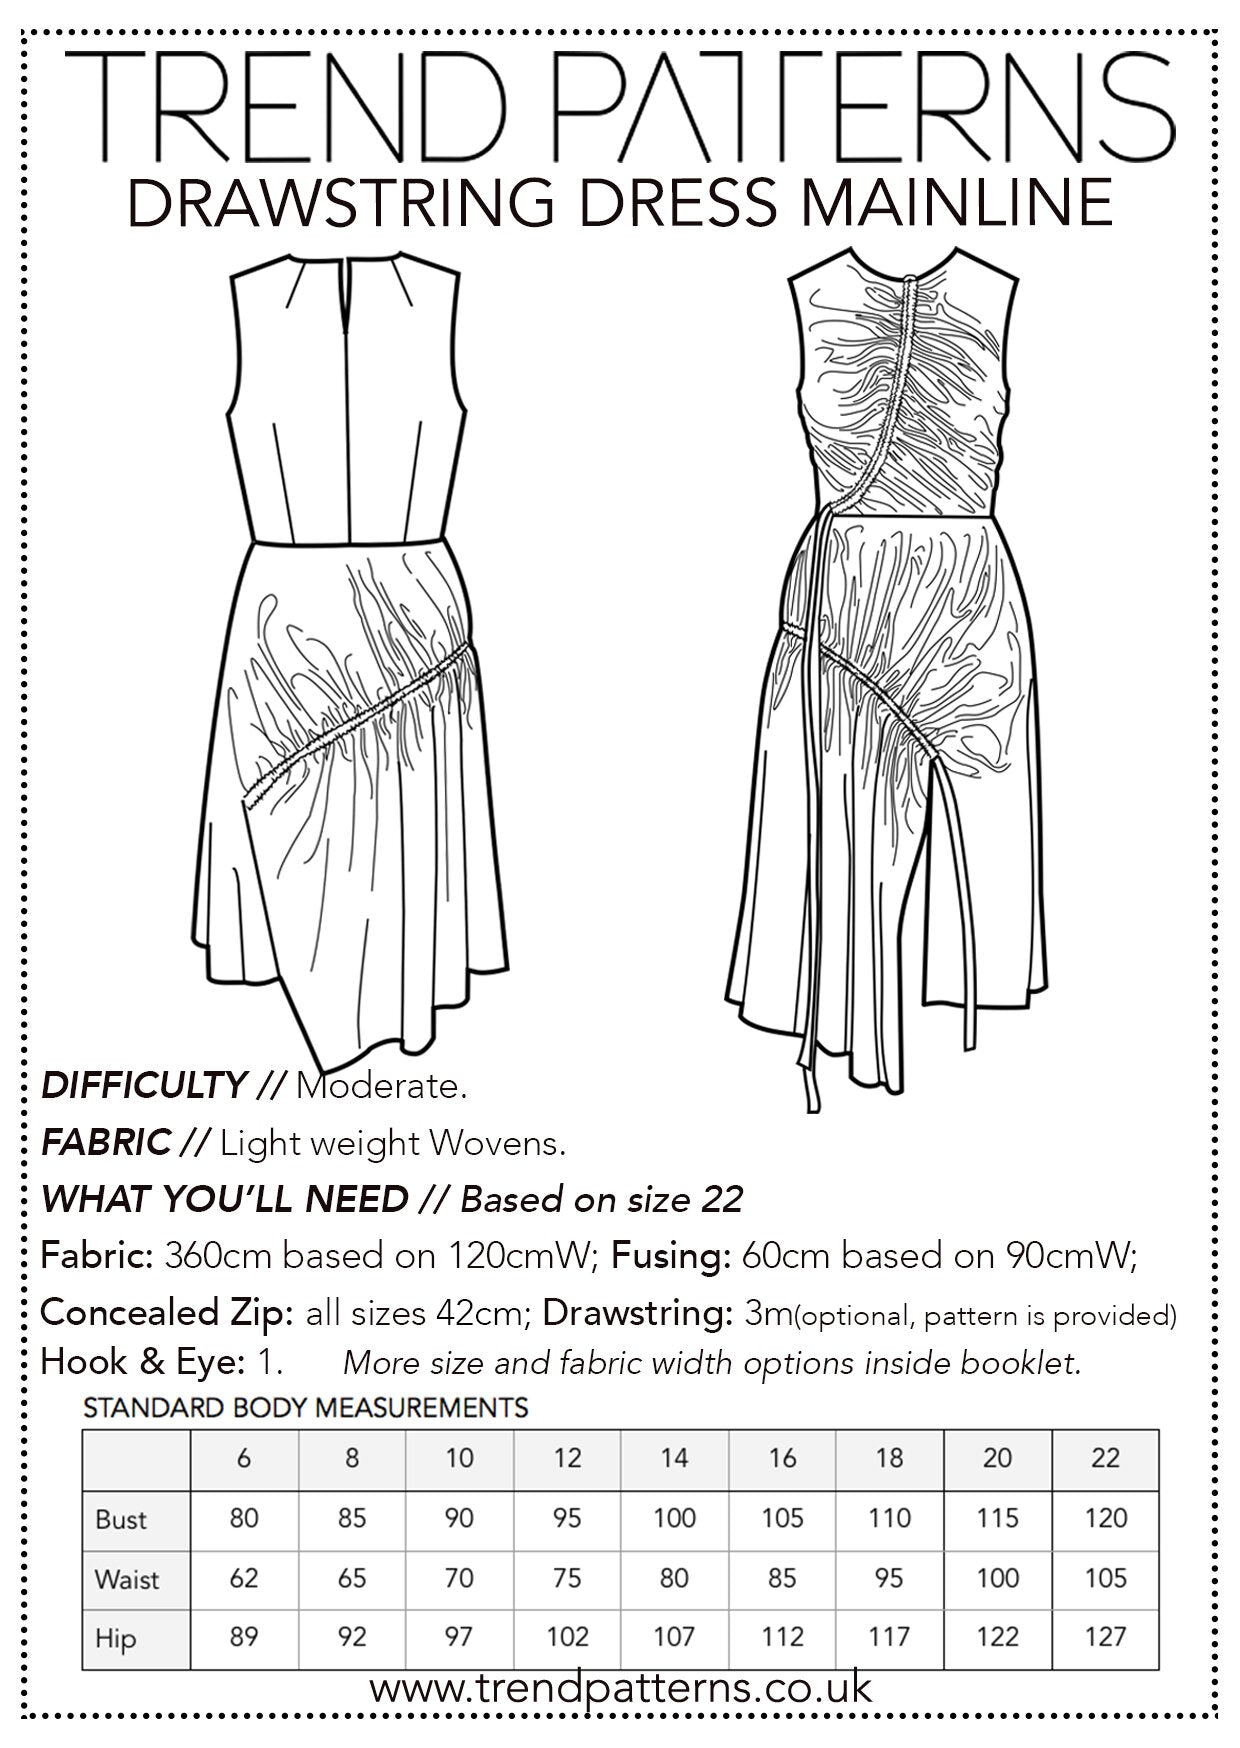 Trend Patterns TPC9 Drawstring Dress